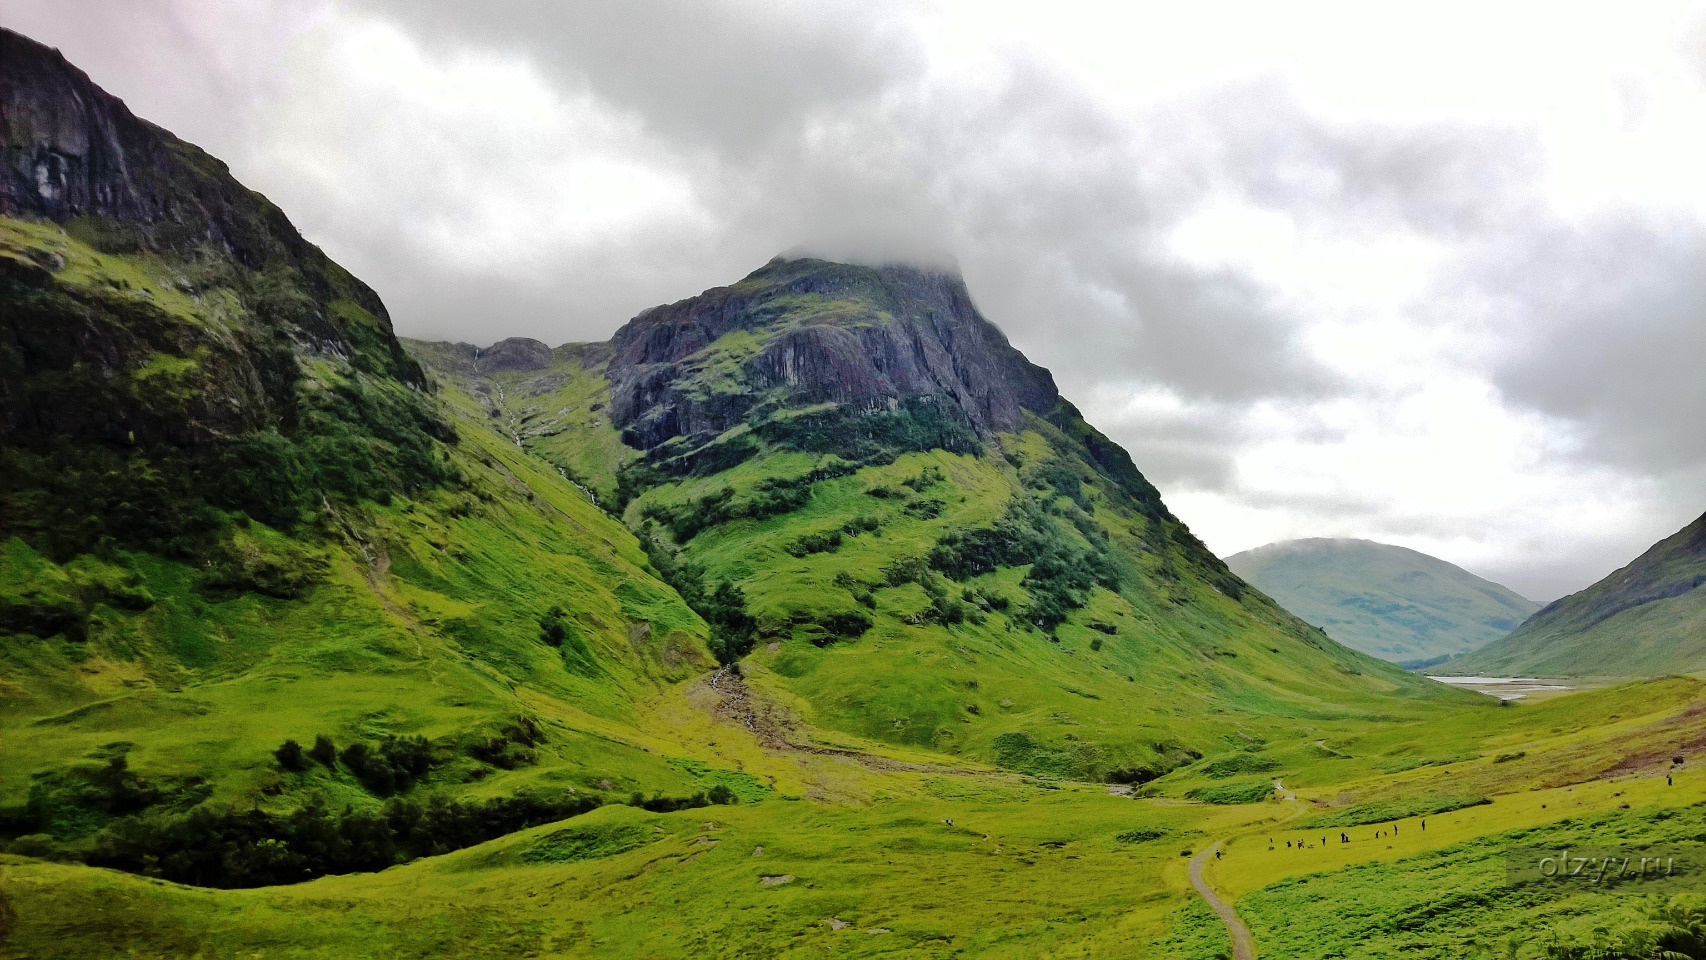 Scotland nature reserves. Грампианские горы Шотландия. Бен-Невис Северо-Шотландское Нагорье. Гора Бен Невис в Шотландии. Шотландия гора Салливан.